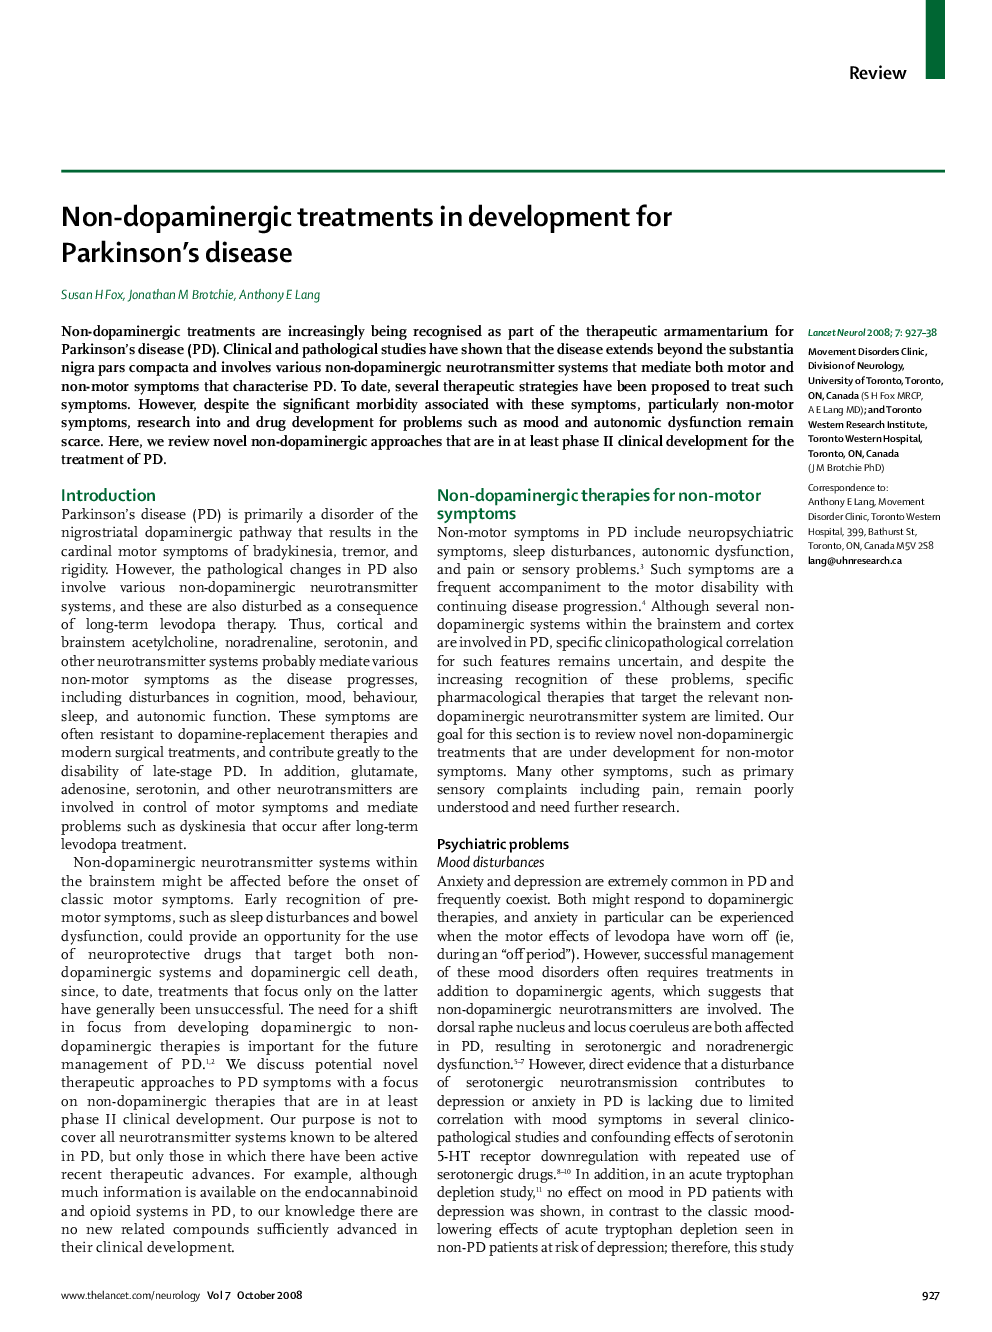 Non-dopaminergic treatments in development for Parkinson's disease